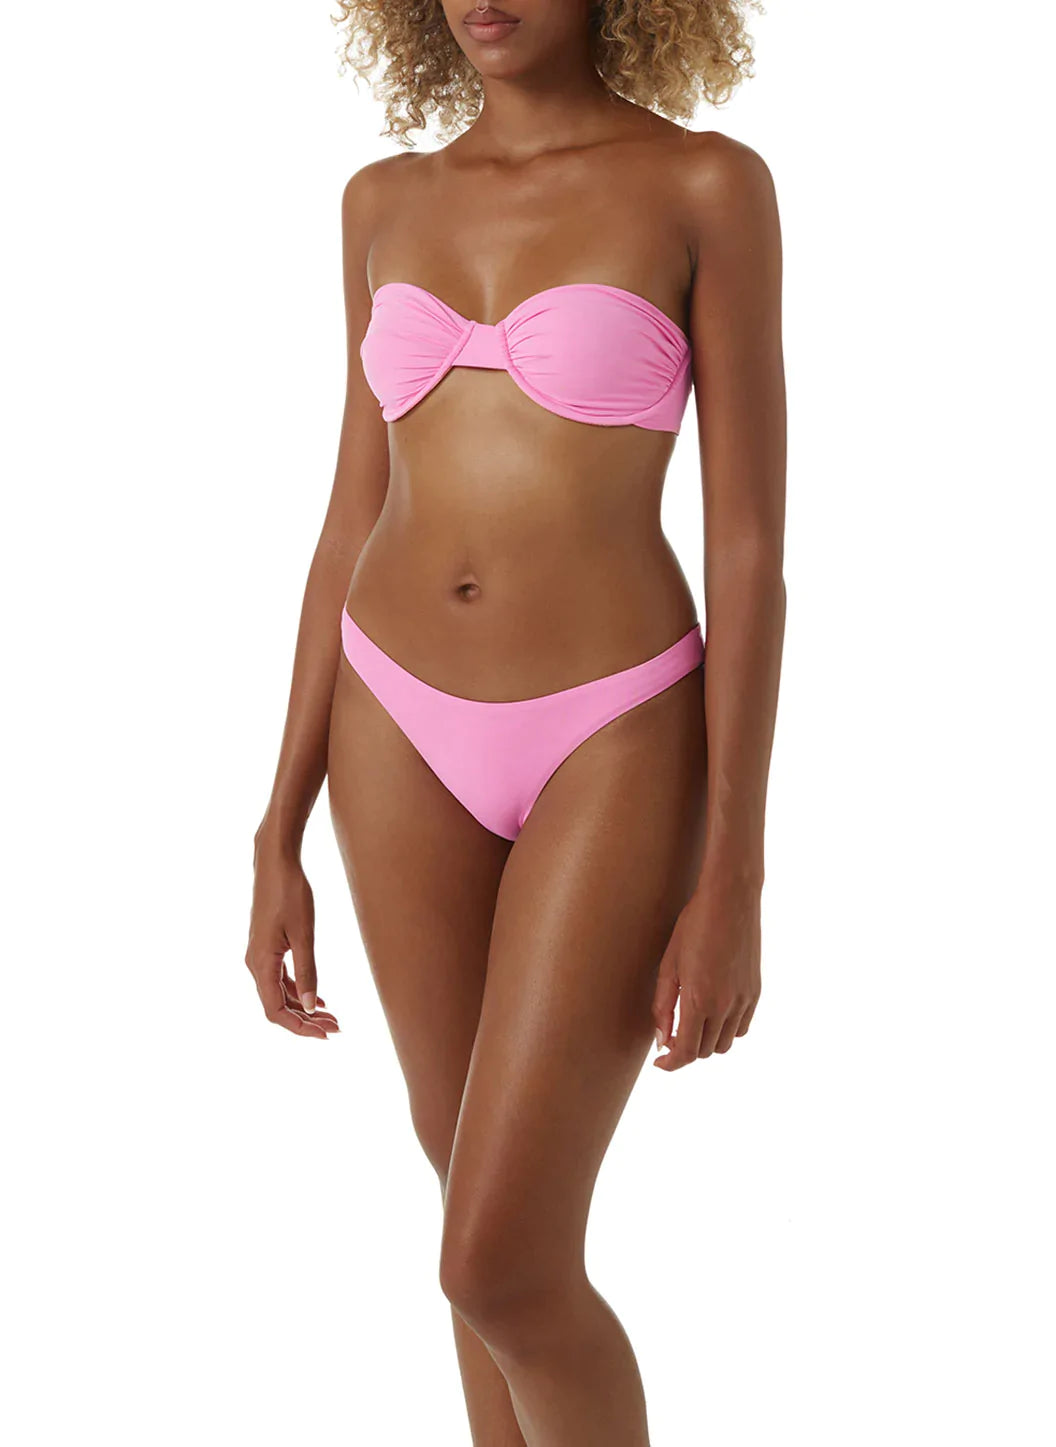 Tortola bandeau bikini top in pink - Melissa Odabash